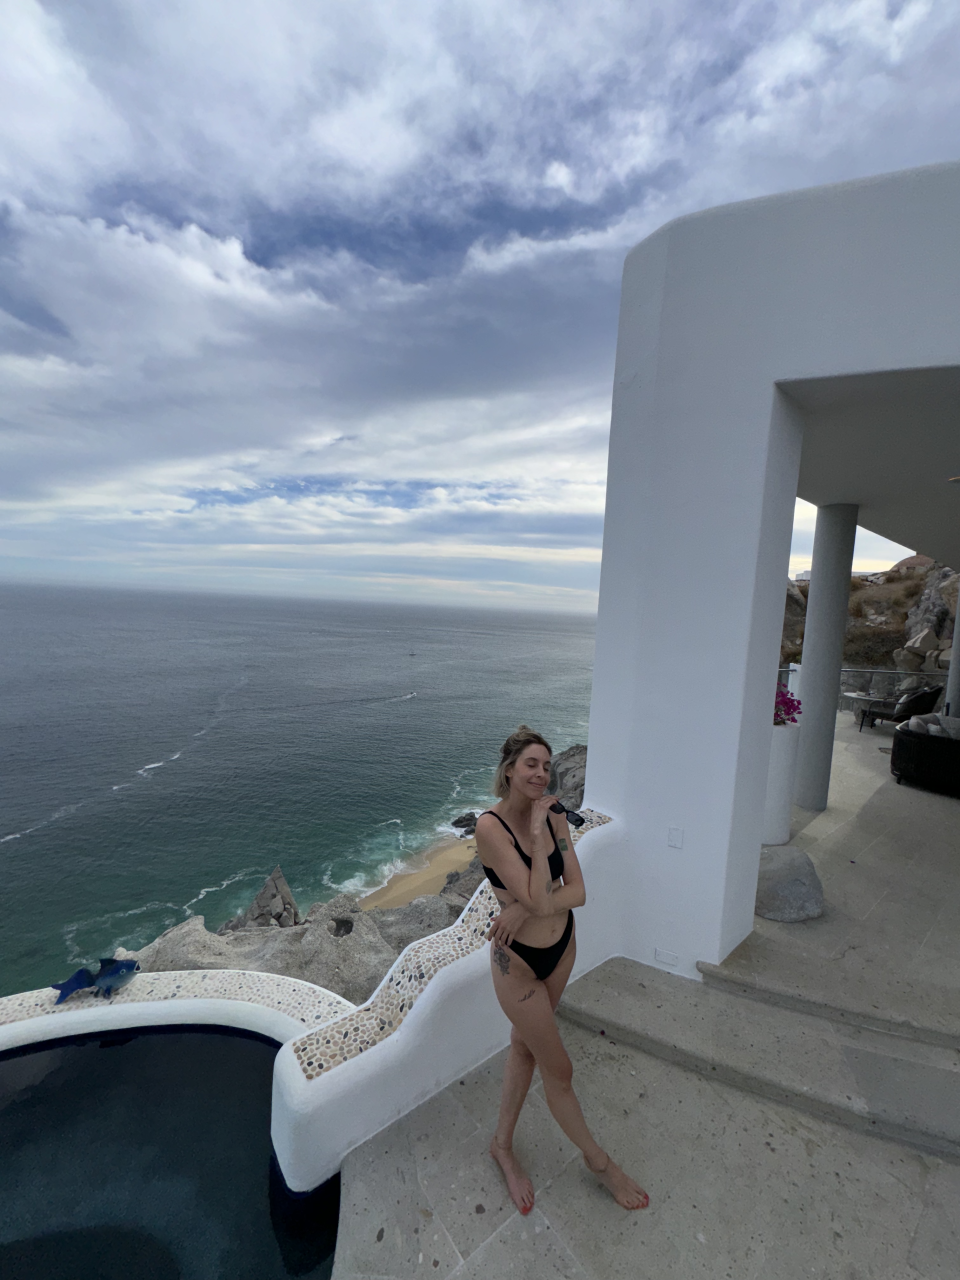 A woman in a black bikini poses near an infinity pool with an ocean view from a coastal cliffside villa